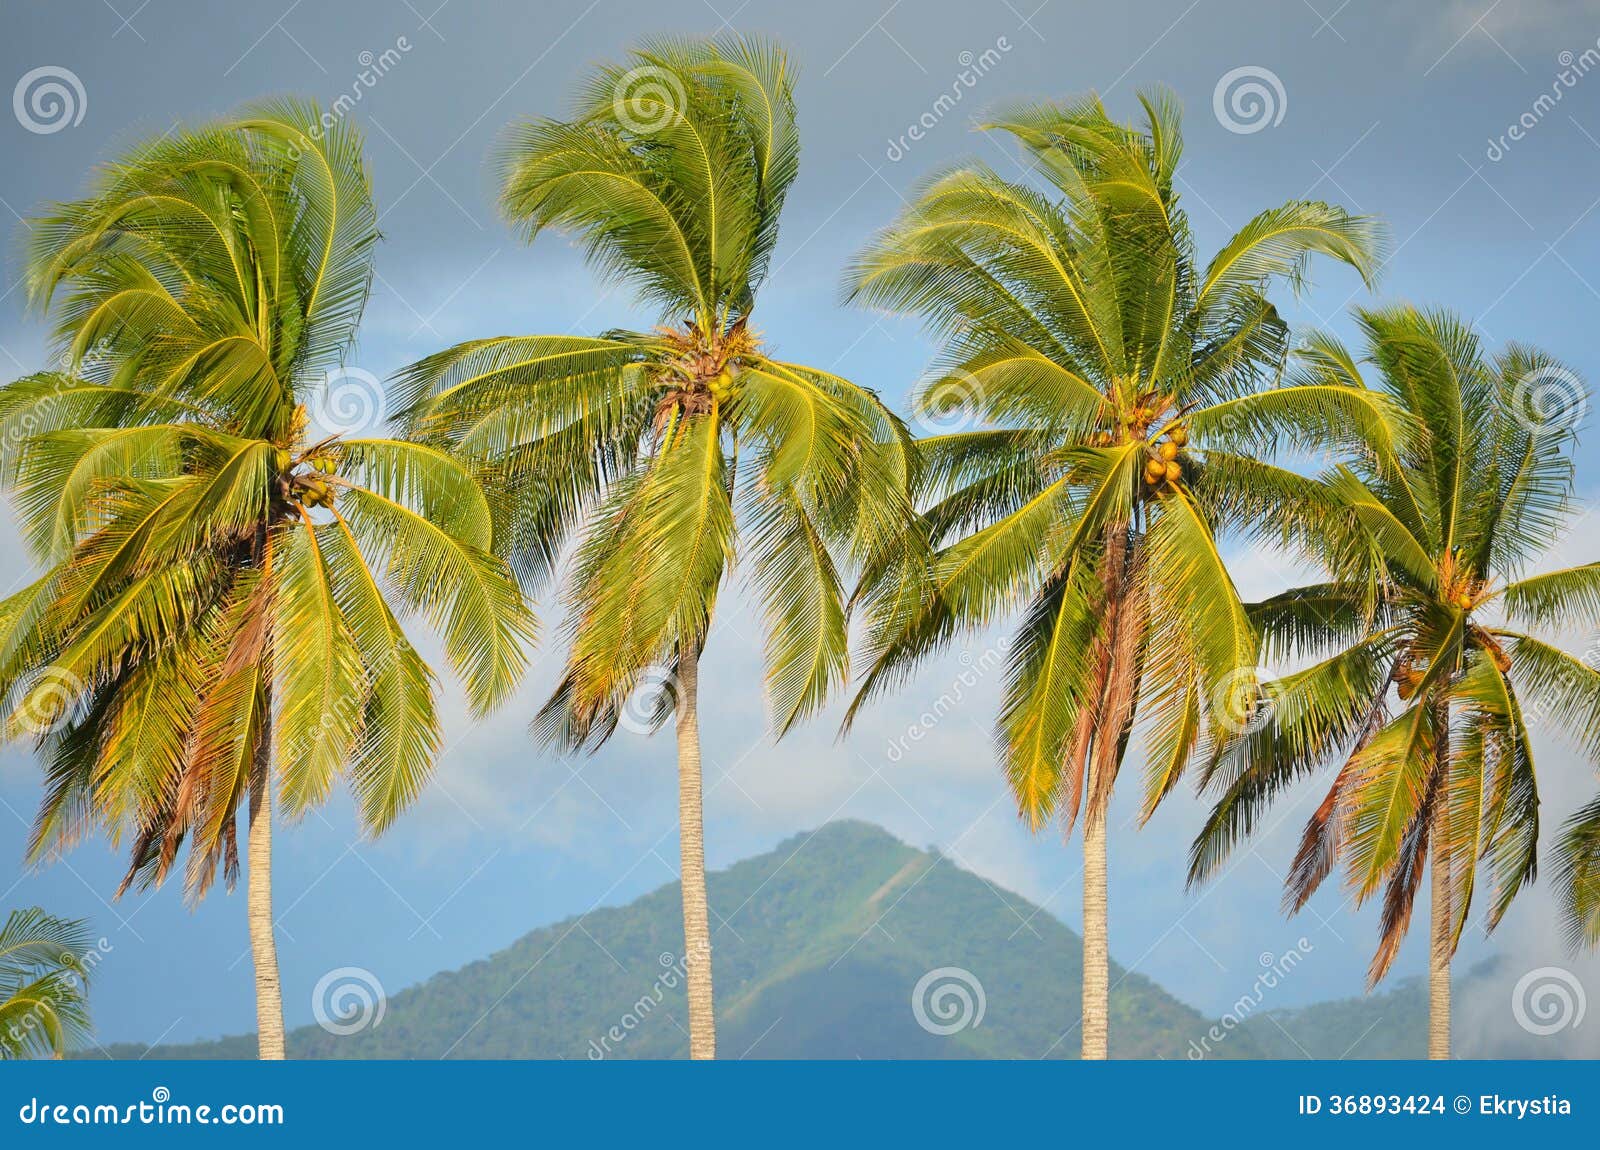 detail of palm trees, playa el espino